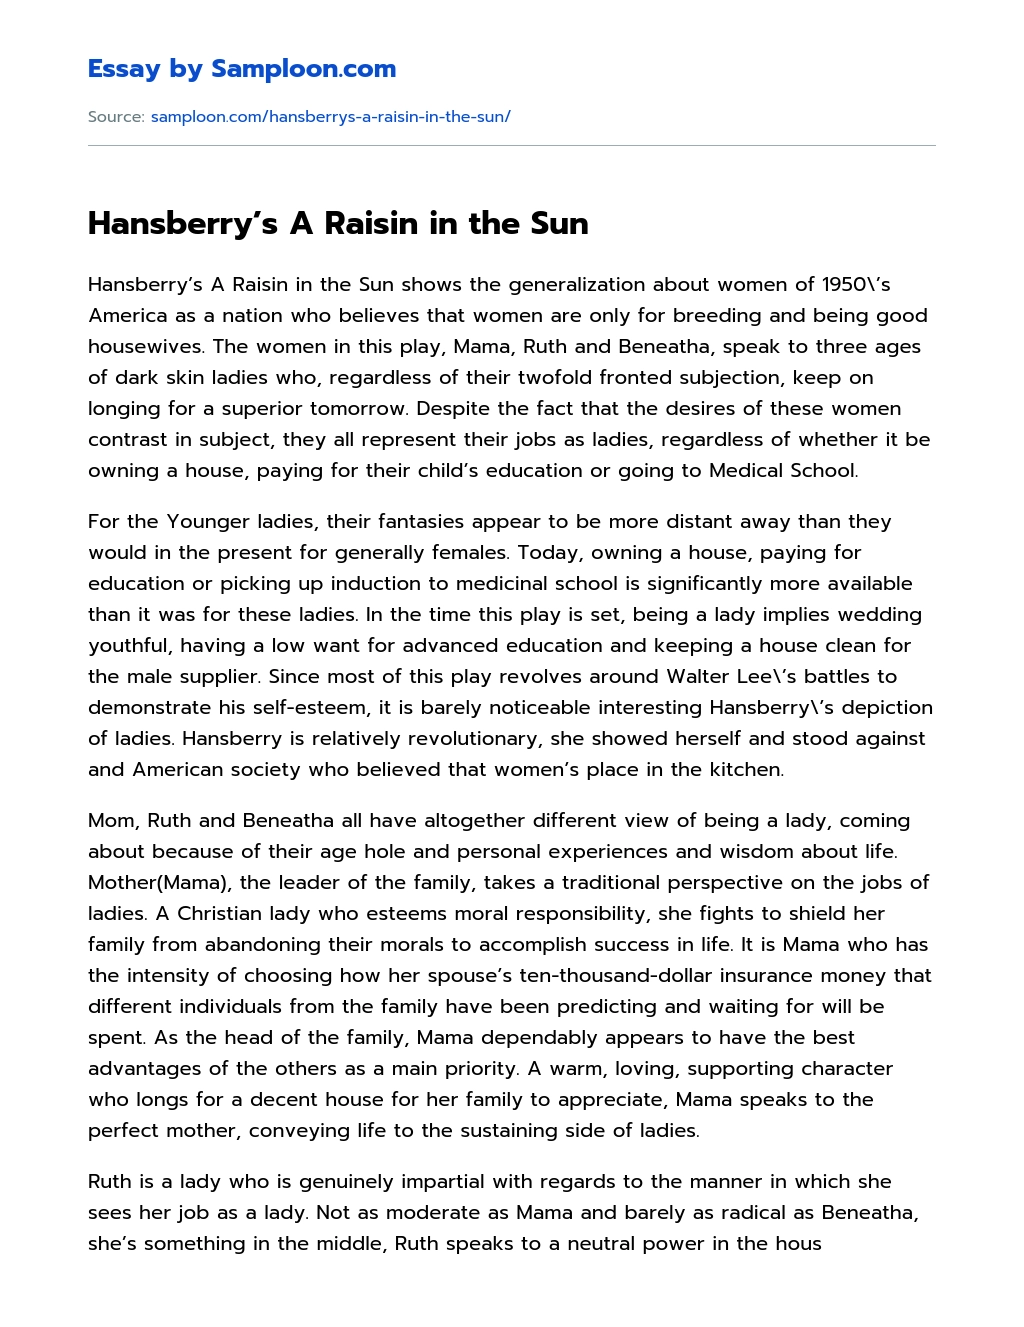 Hansberry’s A Raisin in the Sun essay